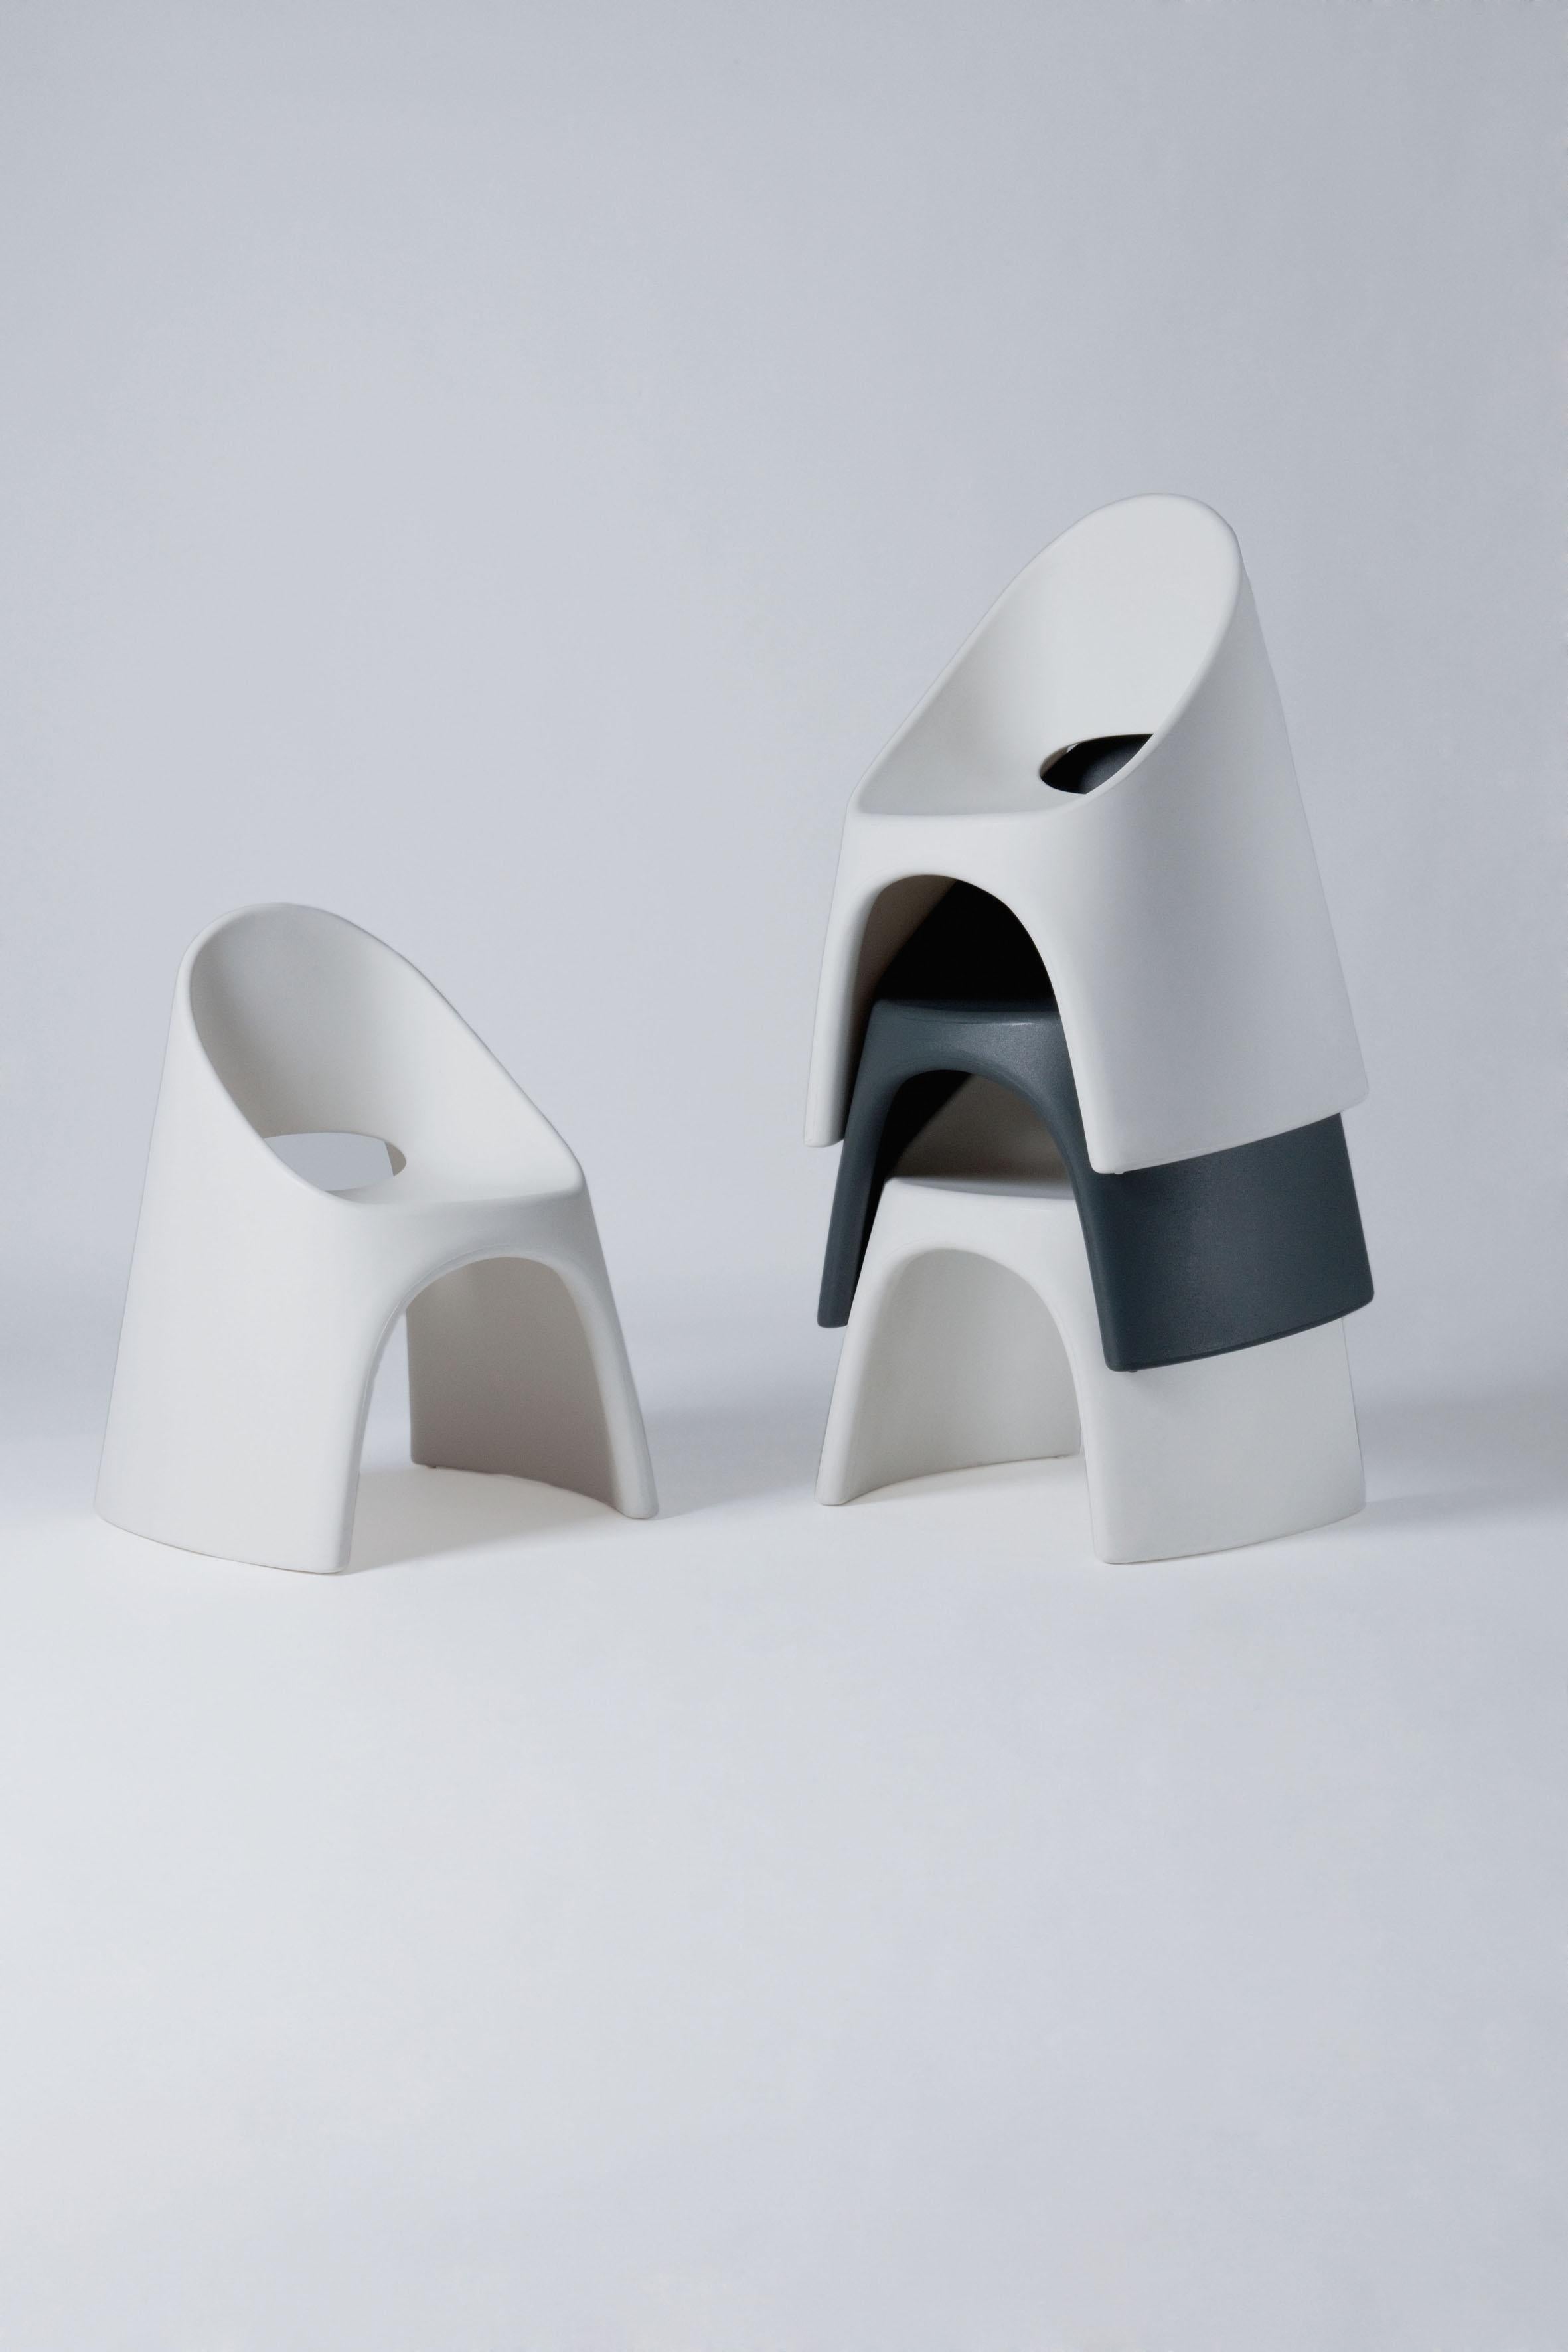 Italian Slide Design Amélie Chair in Argil Gray by Italo Pertichini For Sale